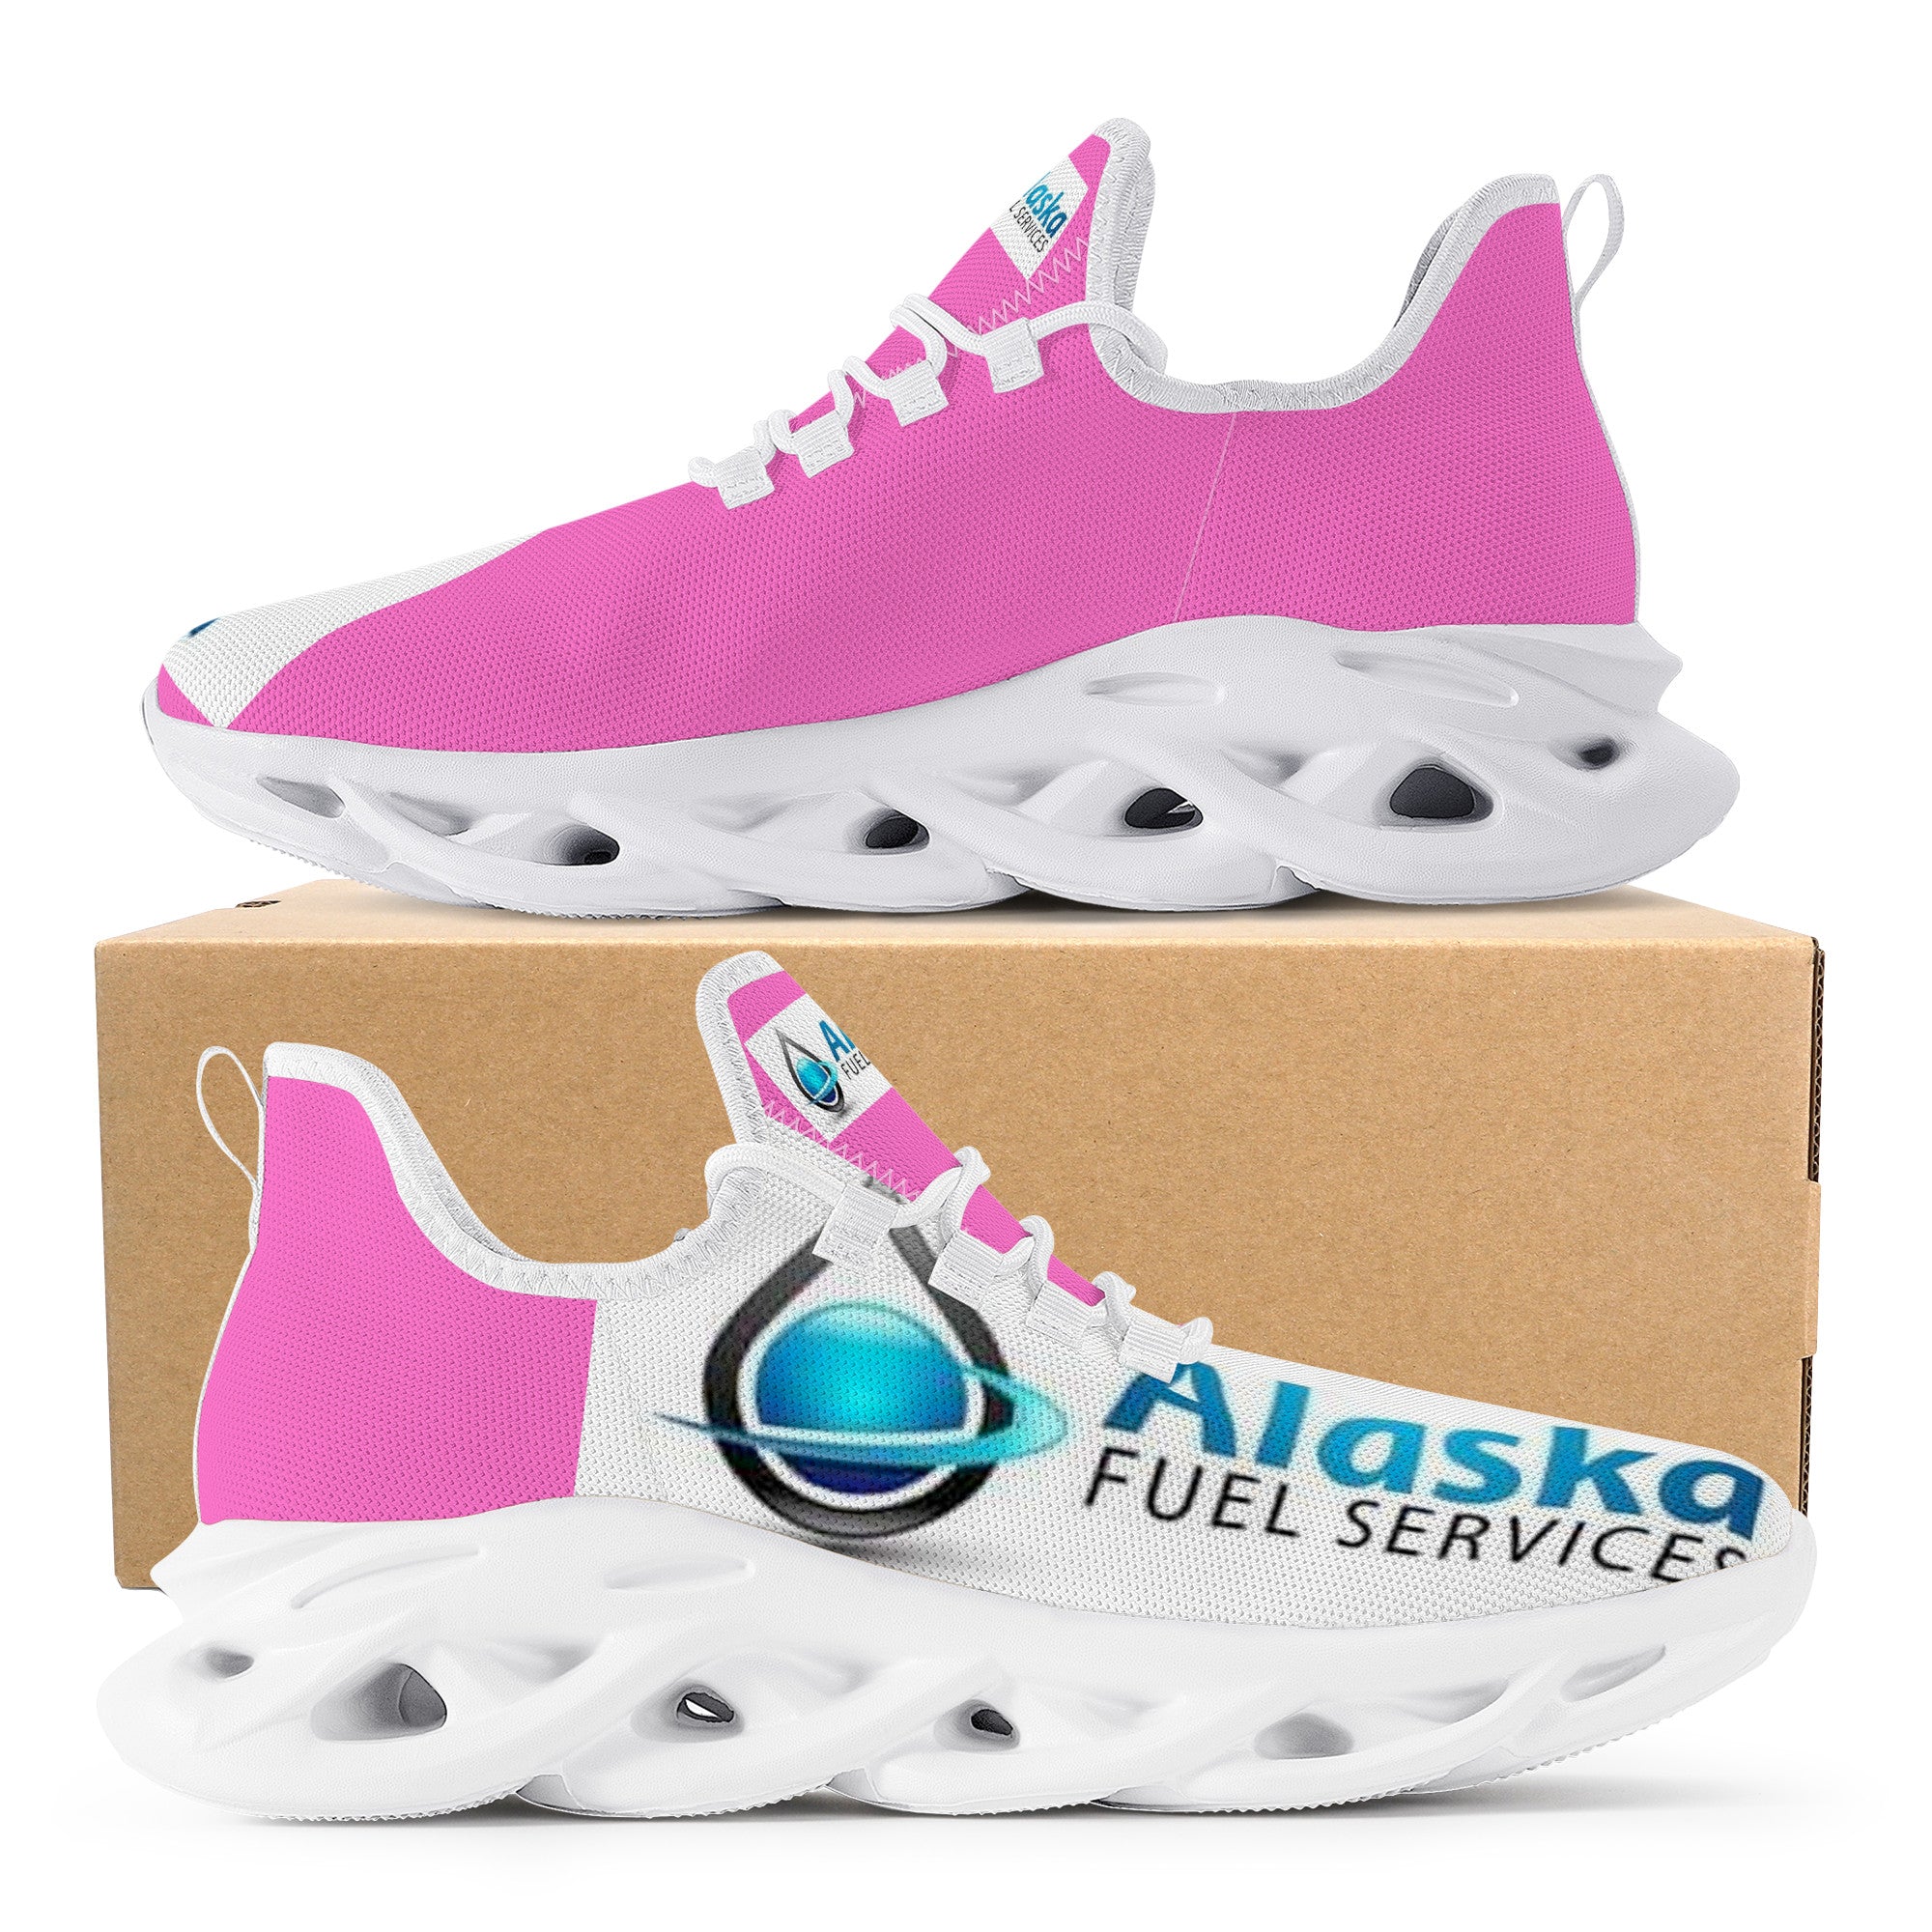 Alaska Fuel Service | Custom Branded Company Shoes | Shoe Zero